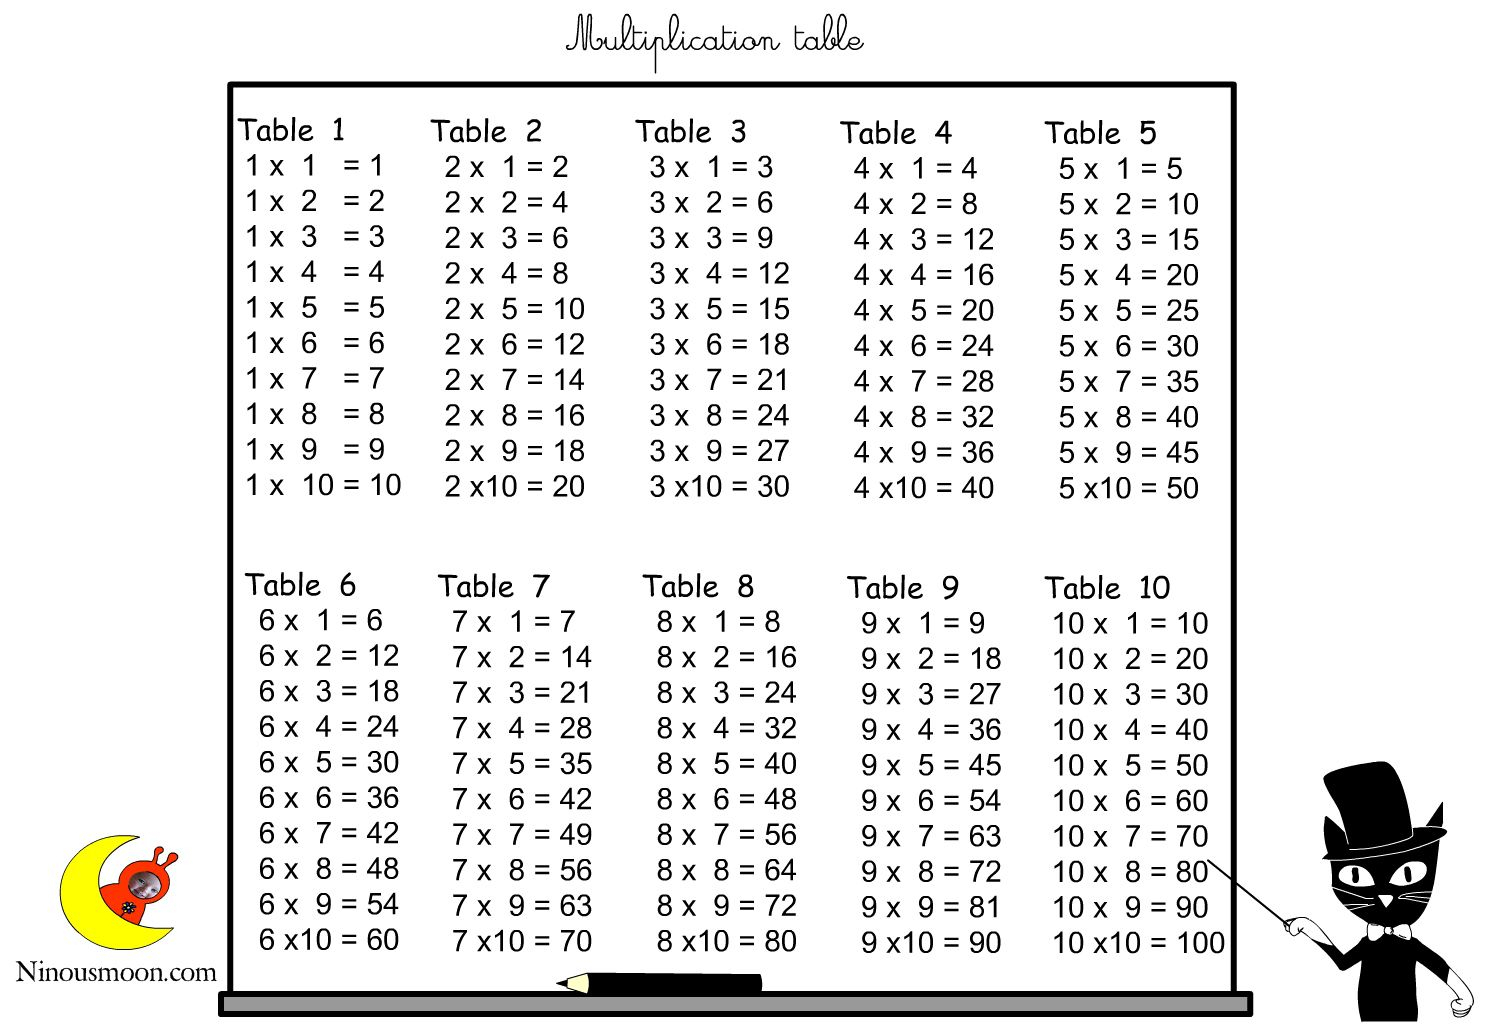 Таблица умножения компактная